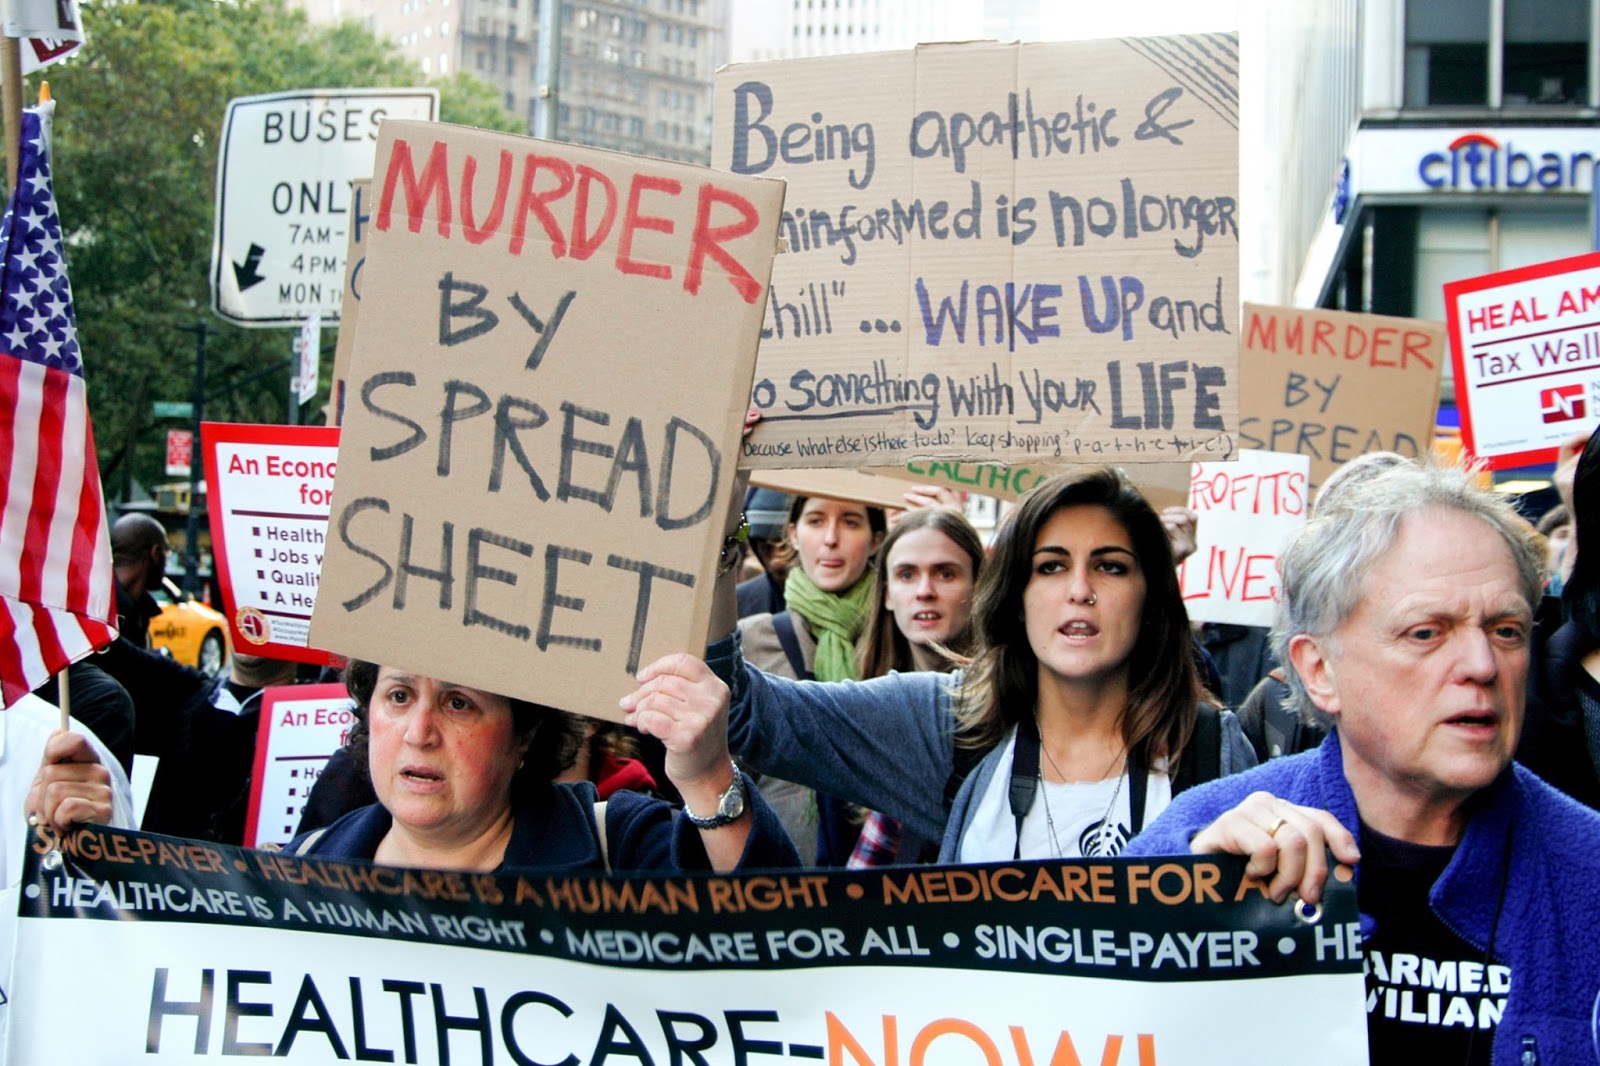 Medicare for All, murder by spreadsheet